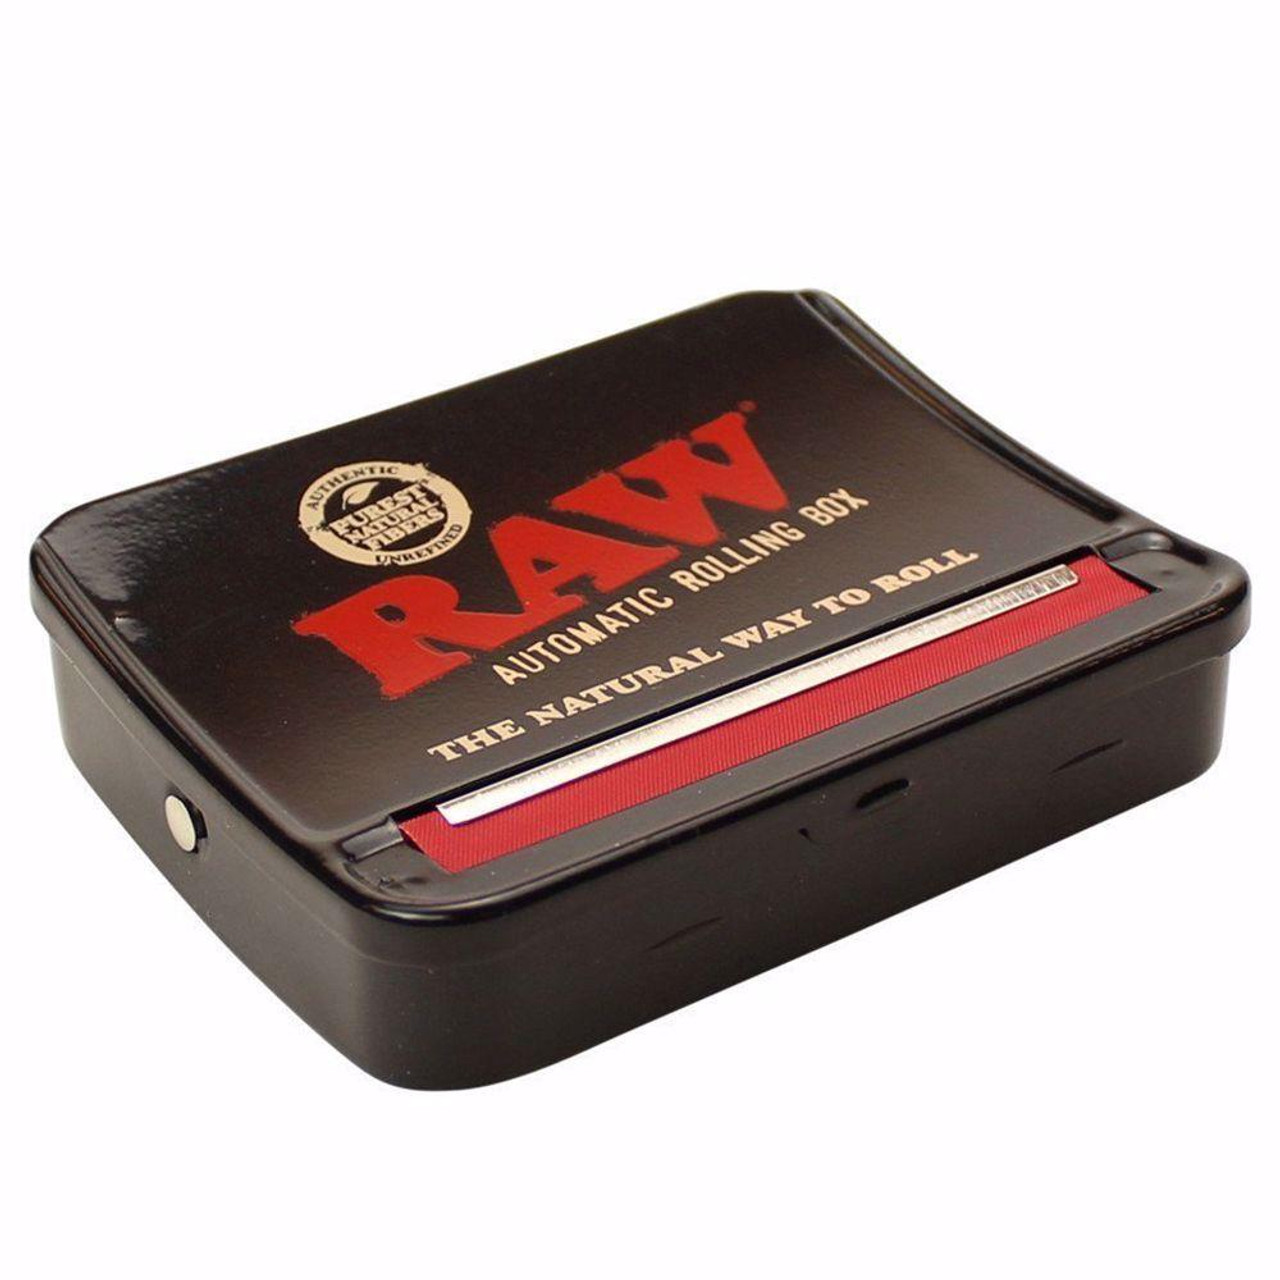 RAWtomatic Rolling Box • RAWthentic